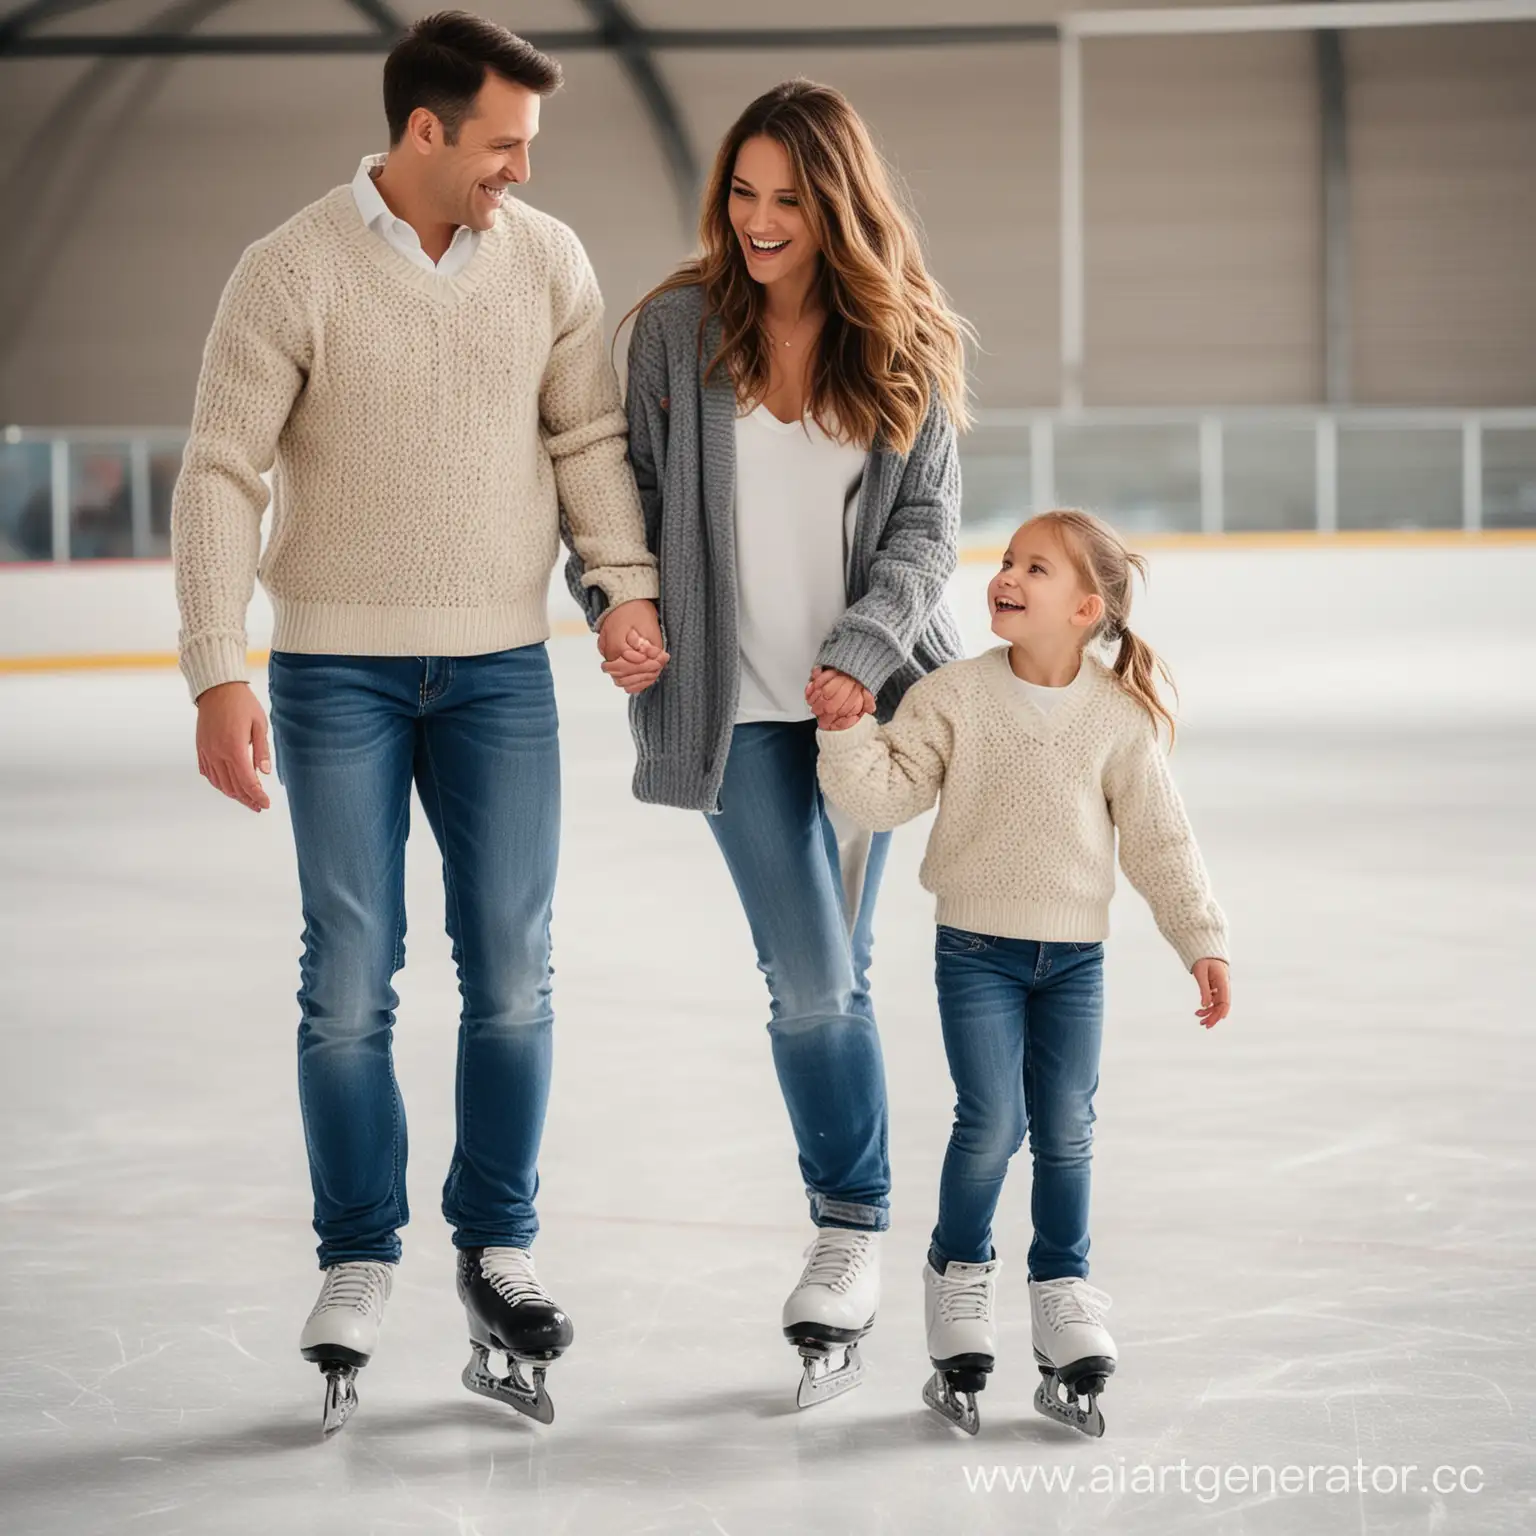 Family-Enjoying-Ice-Skating-Together-at-Rink